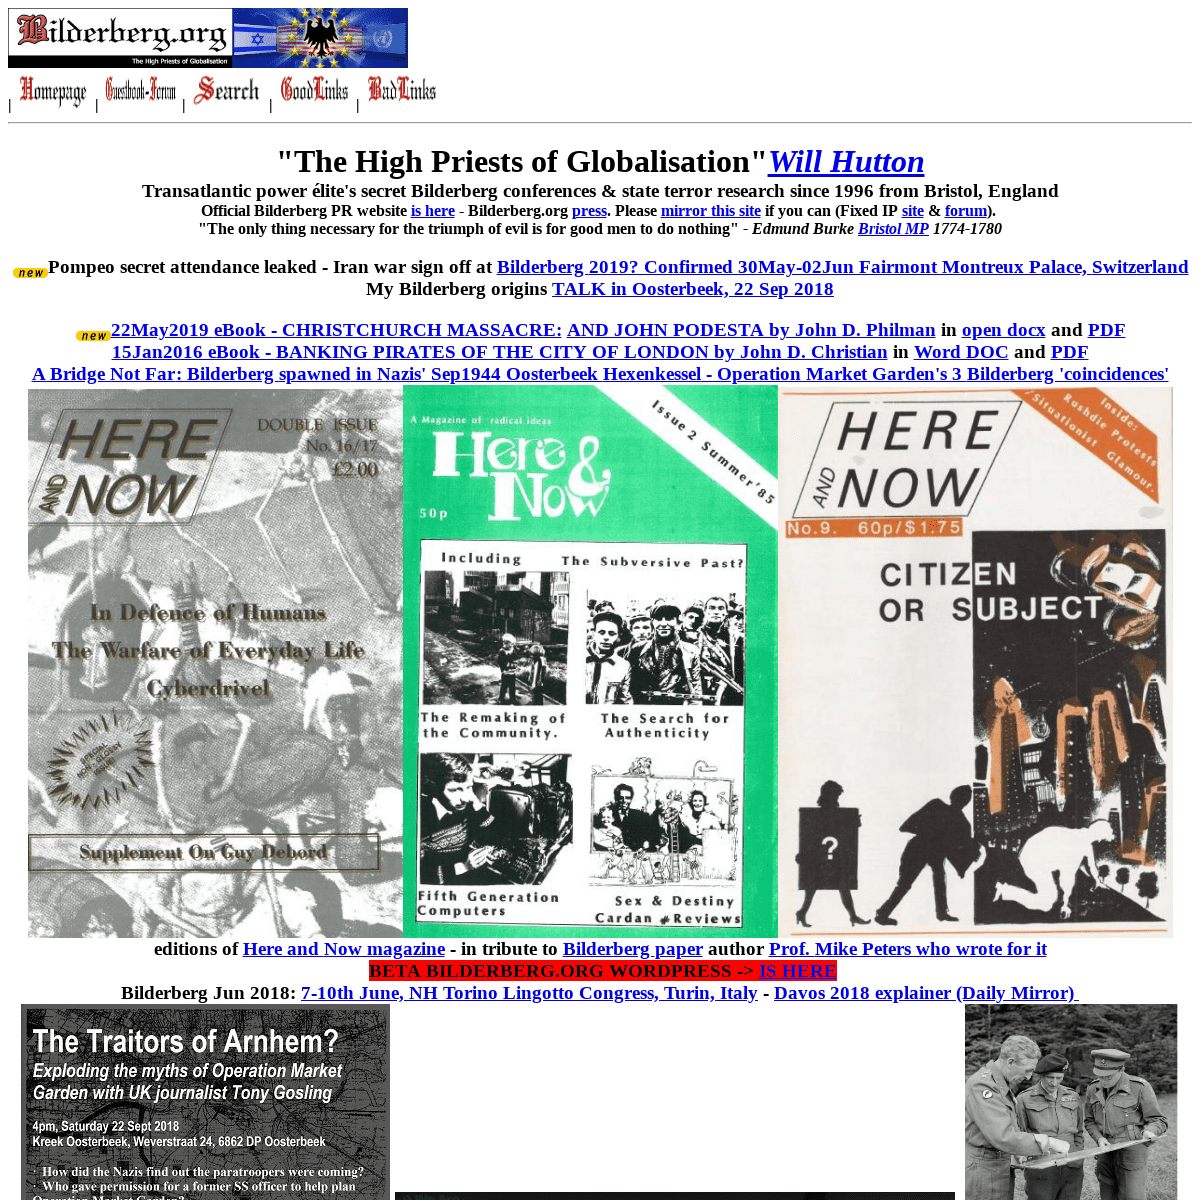 Bilderberg Nazi roots censored by Wikipedia StratCom hackers - https://37.220.108.147/members/www.bilderberg.org/ www.bilderberg